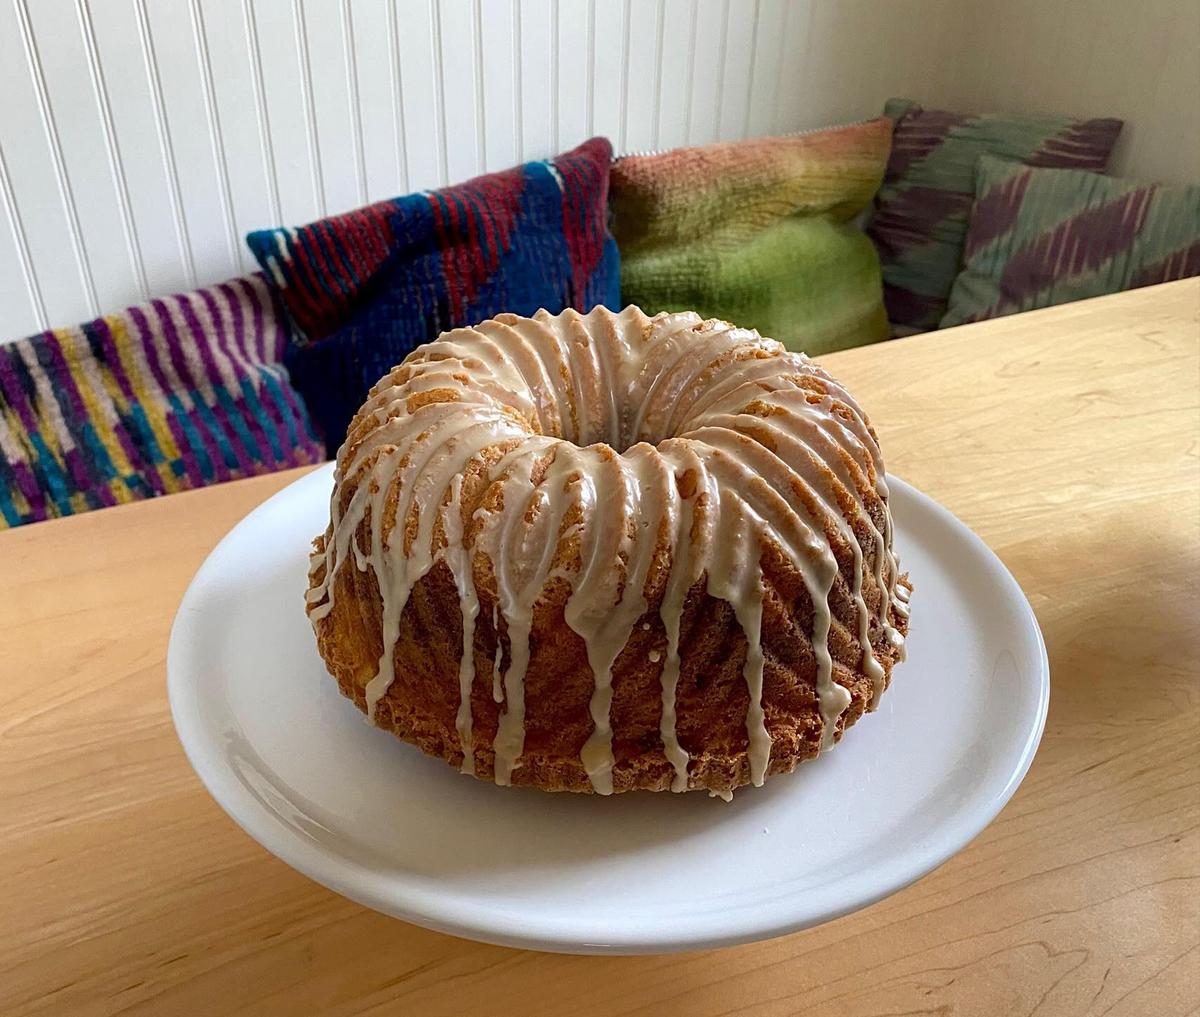 Cinnamon Swirl Bundt Cake from "Sweet Paris: Seasonal Recipes from an American Baker in France.” (Rick Nelson/Harper Design/TNS)